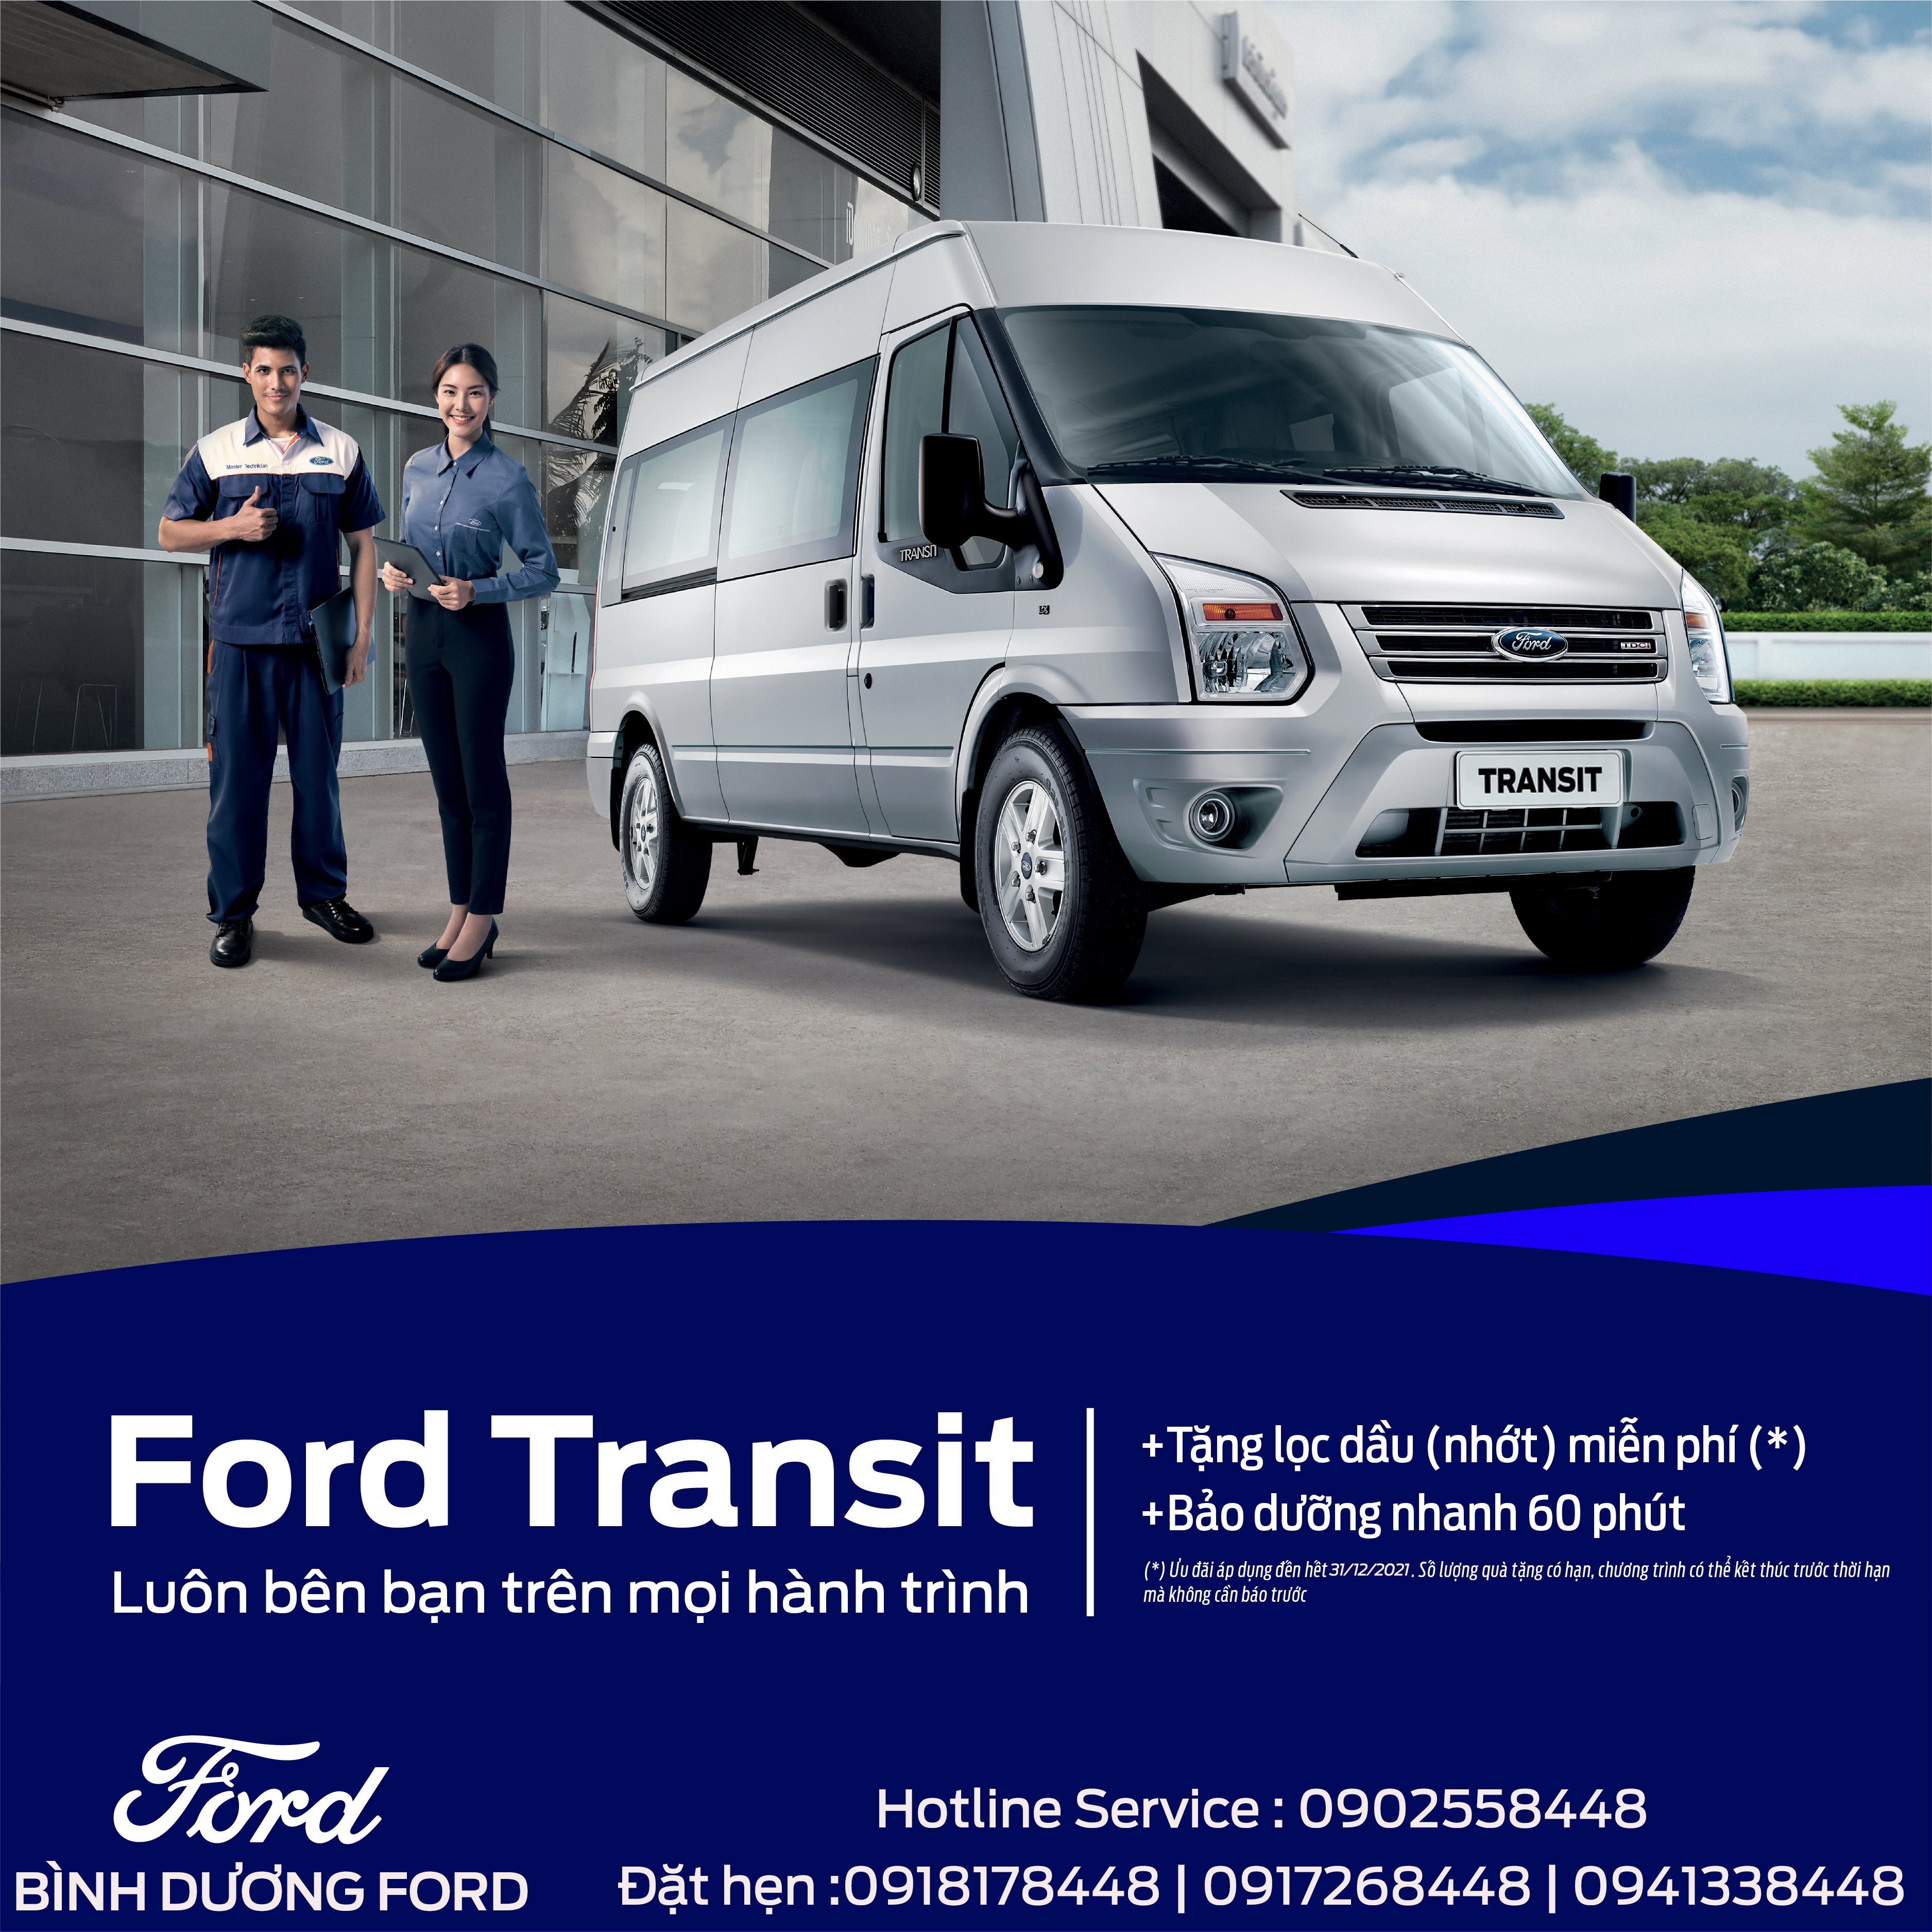 2023 Ford Transit FullSize Cargo Van  Pricing Photos Specs  More  Ford com